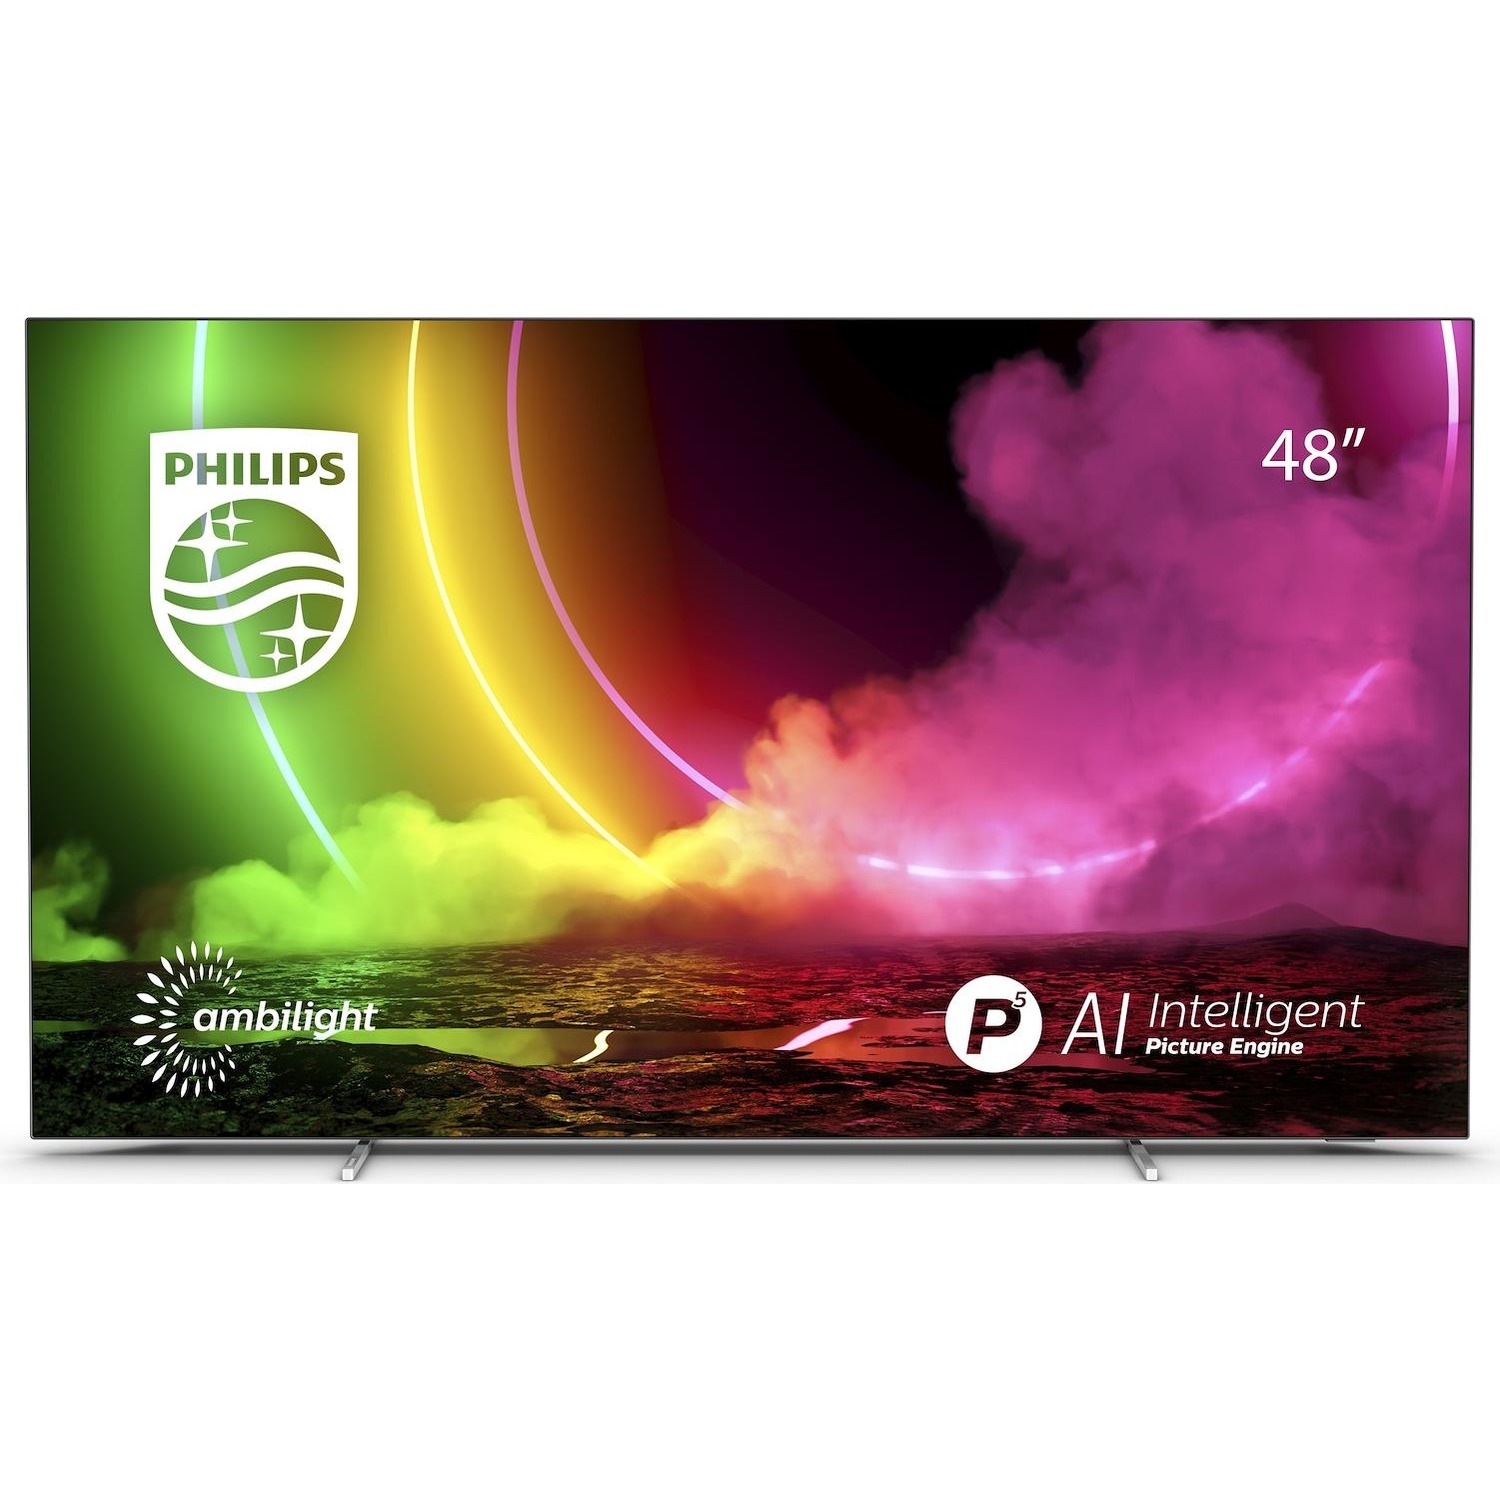 Immagine per TV OLED UHD 4K Smart Philips 48OLED806 da DIMOStore